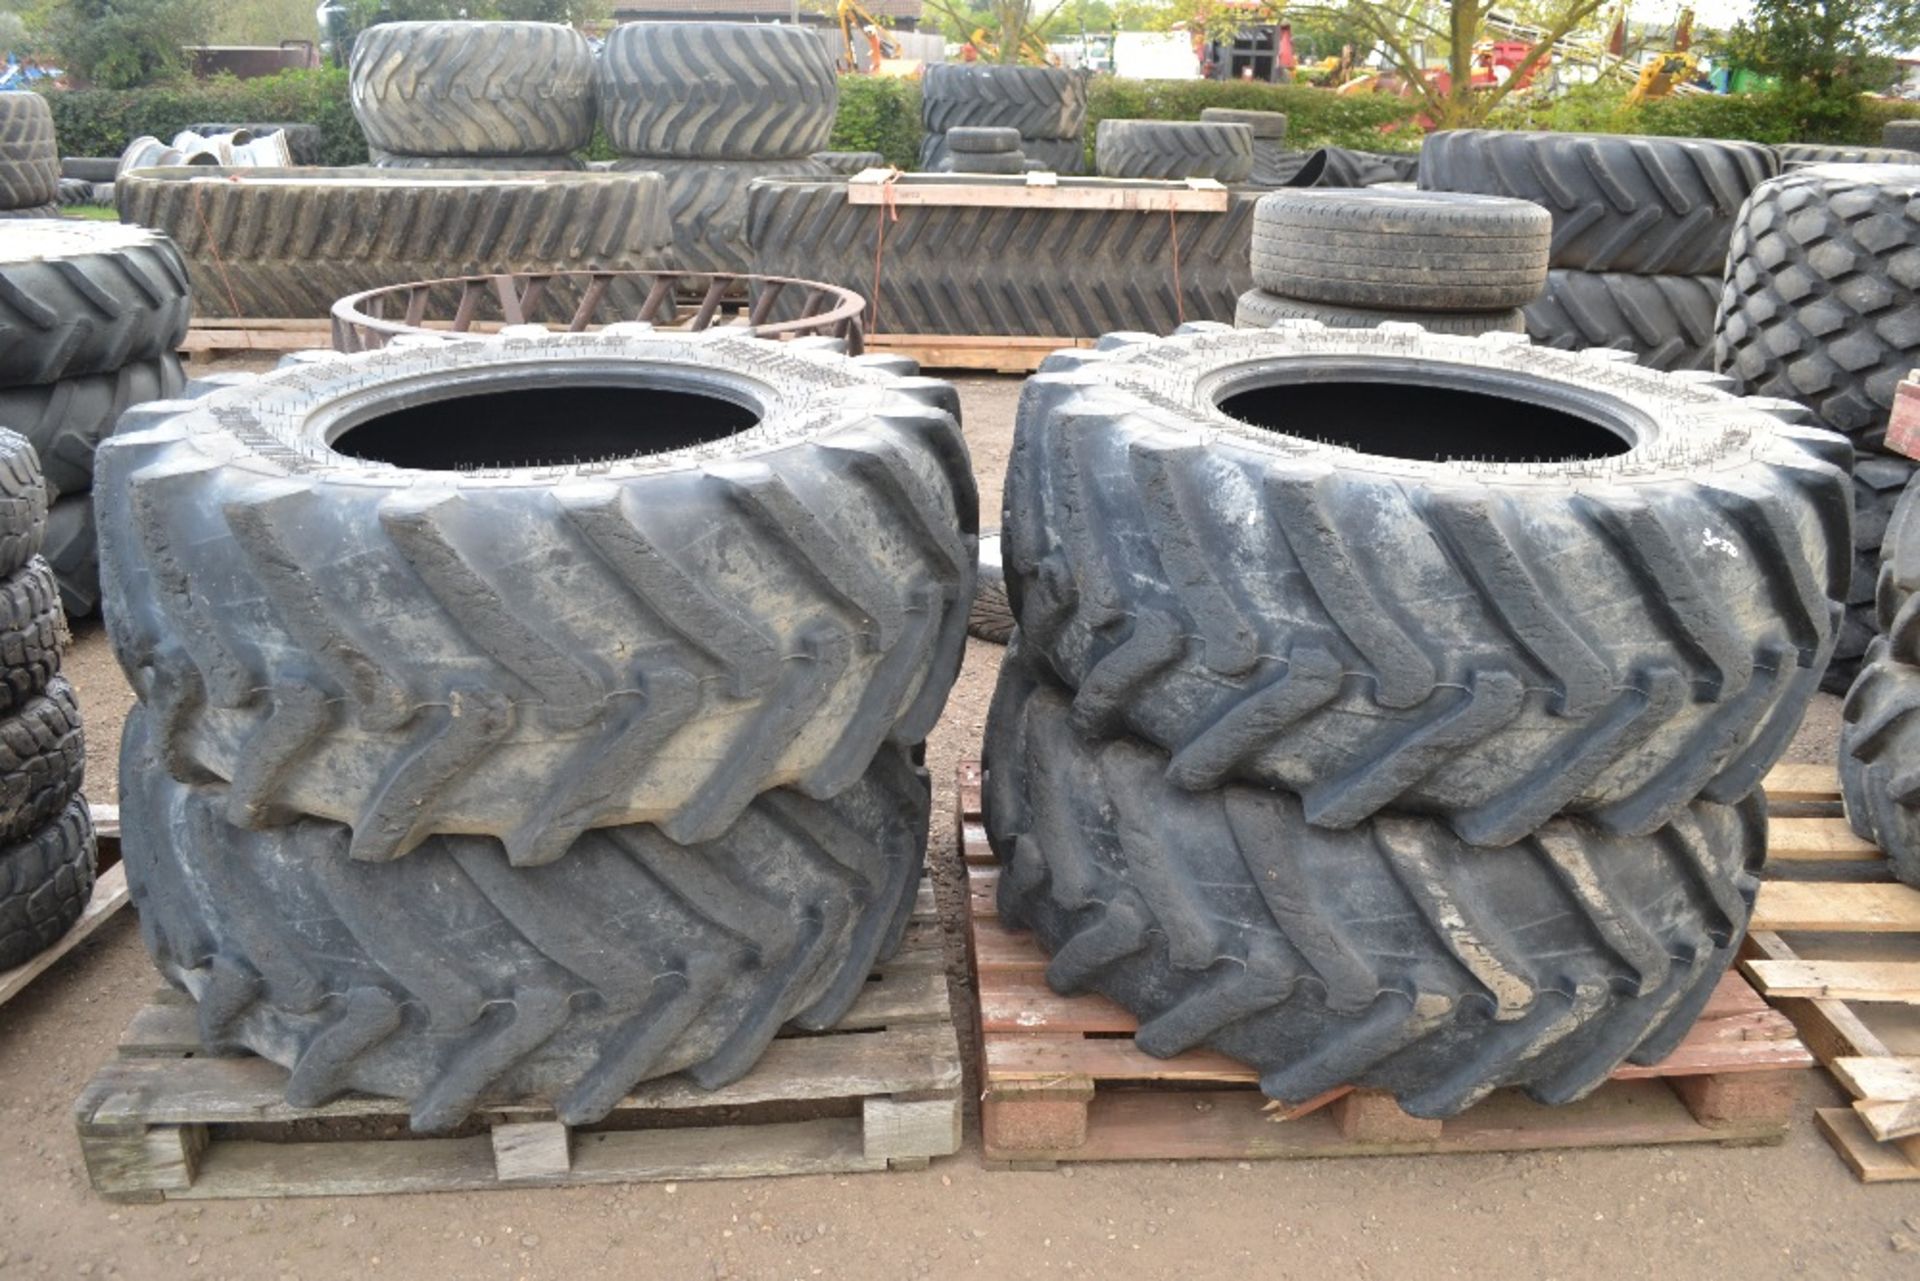 4x 460/70R24 tyres.